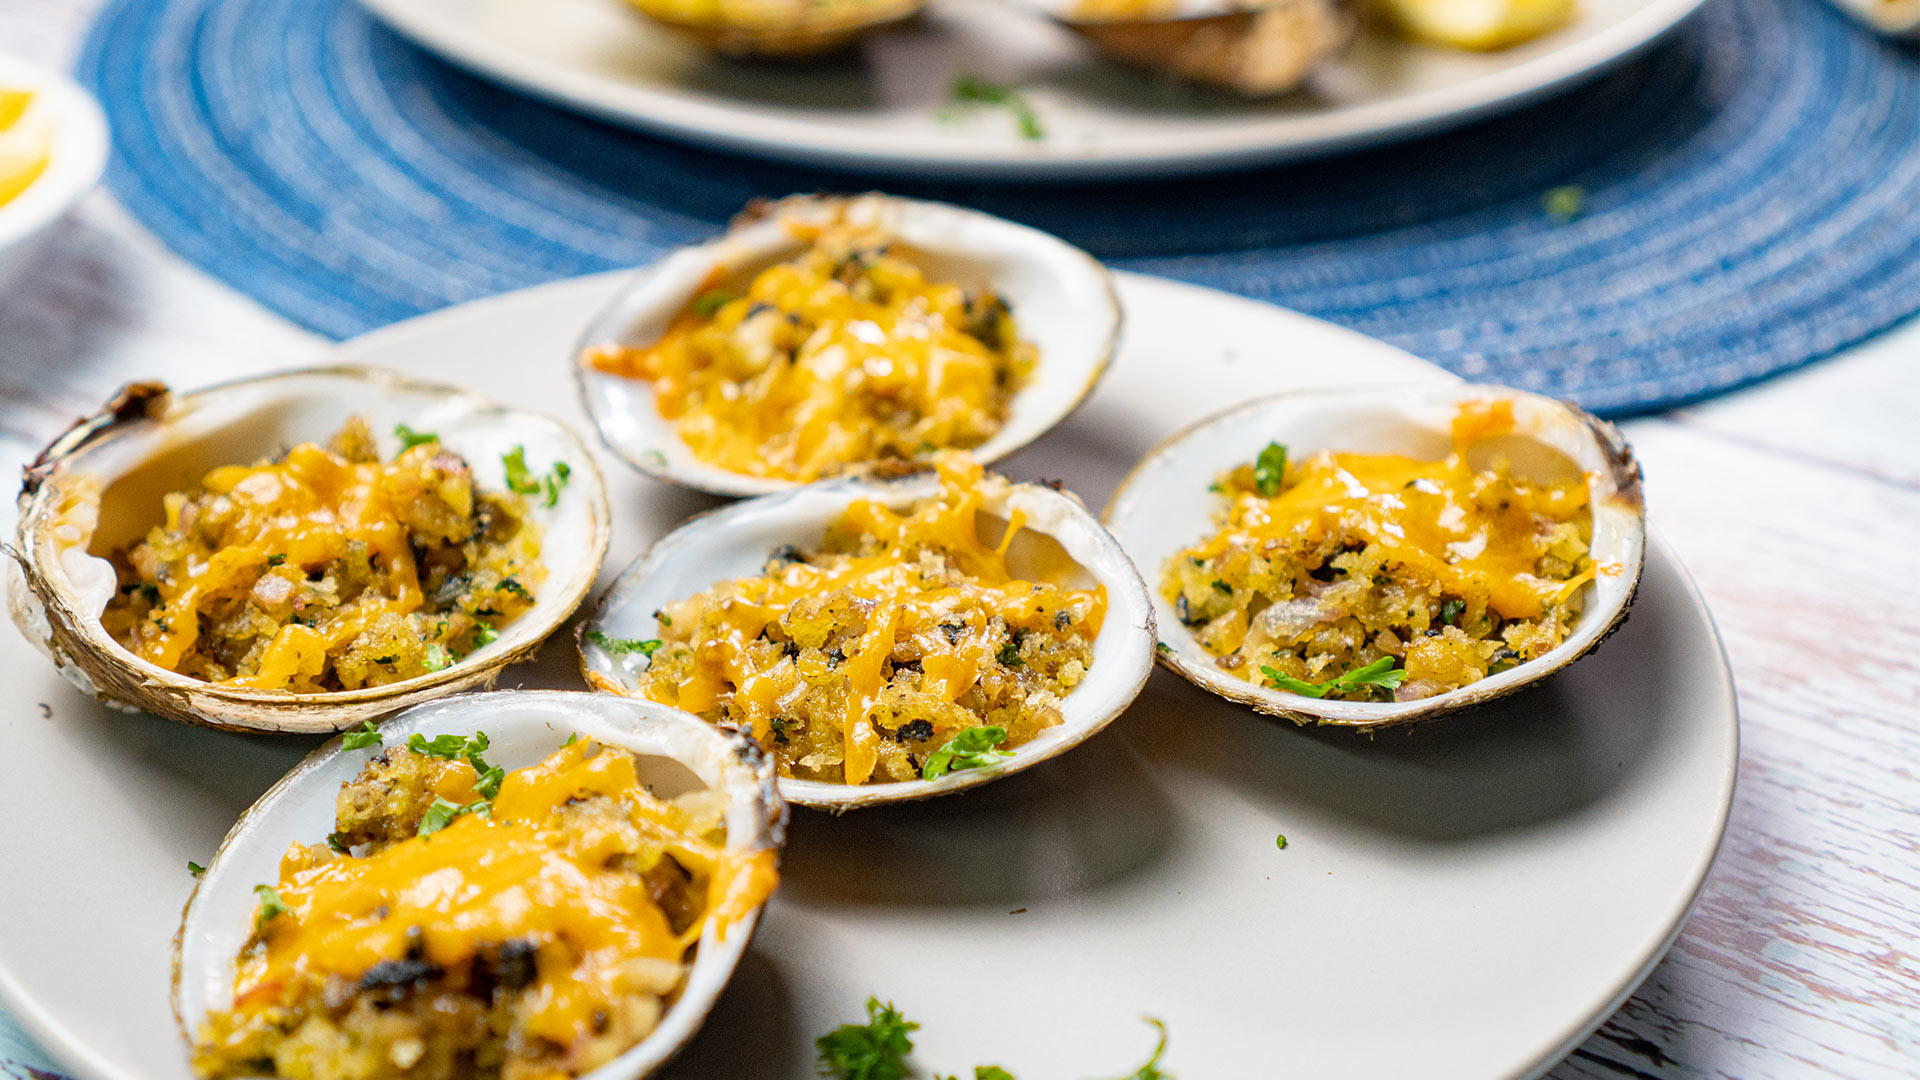 https://recipes.net/wp-content/uploads/2020/03/cheesy-stuffed-clams-recipes.jpg